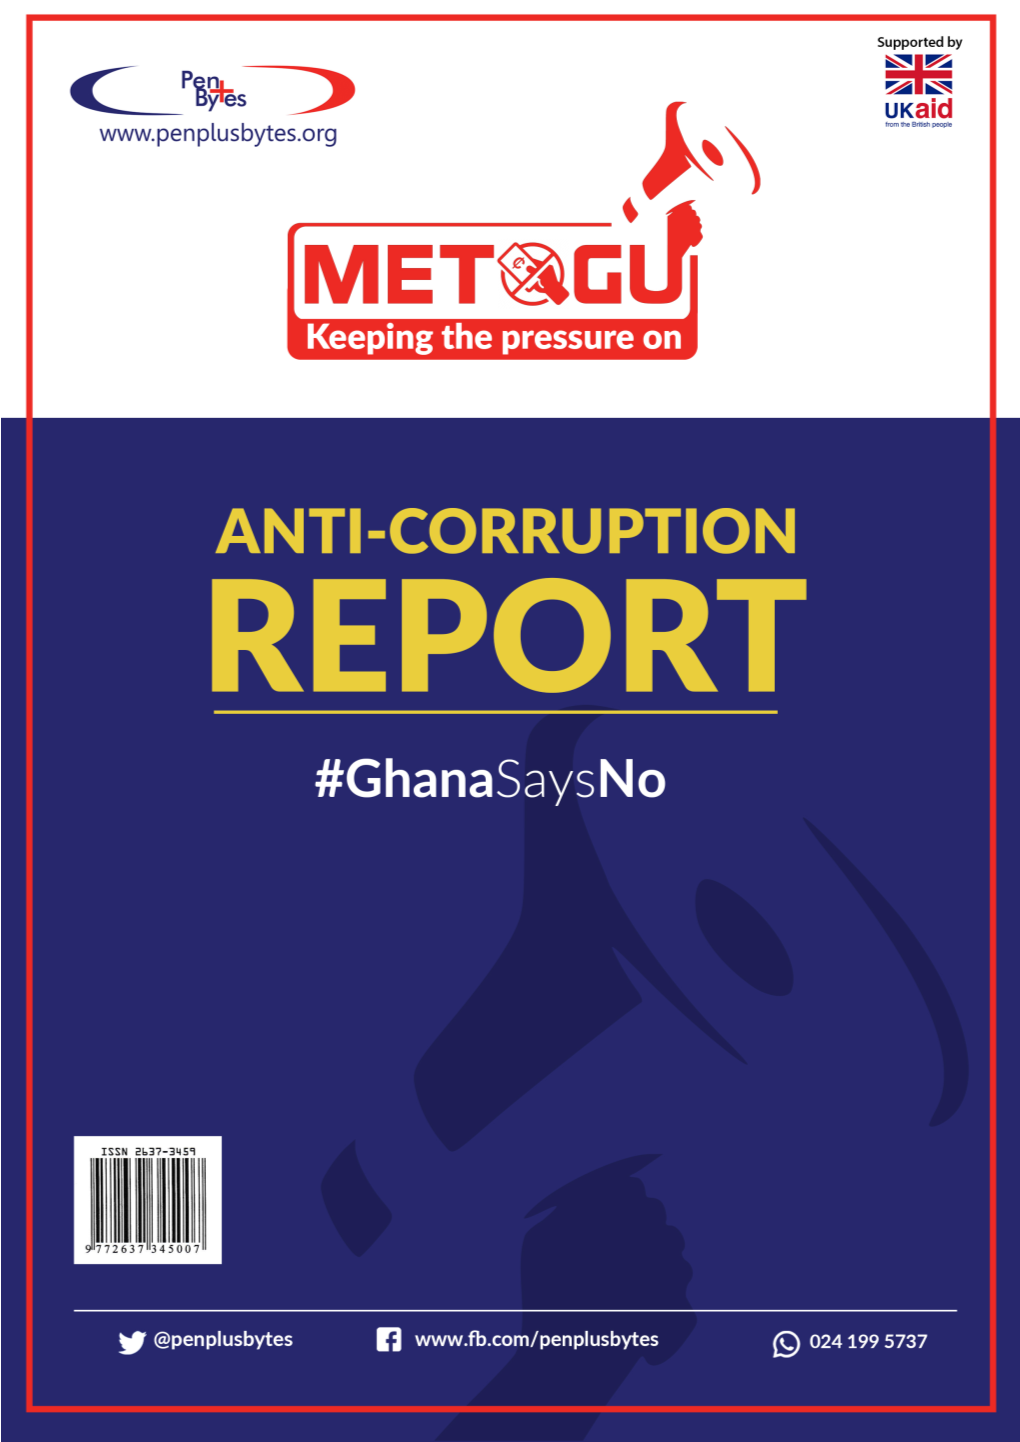 Metogu Anti-Corruption Report By